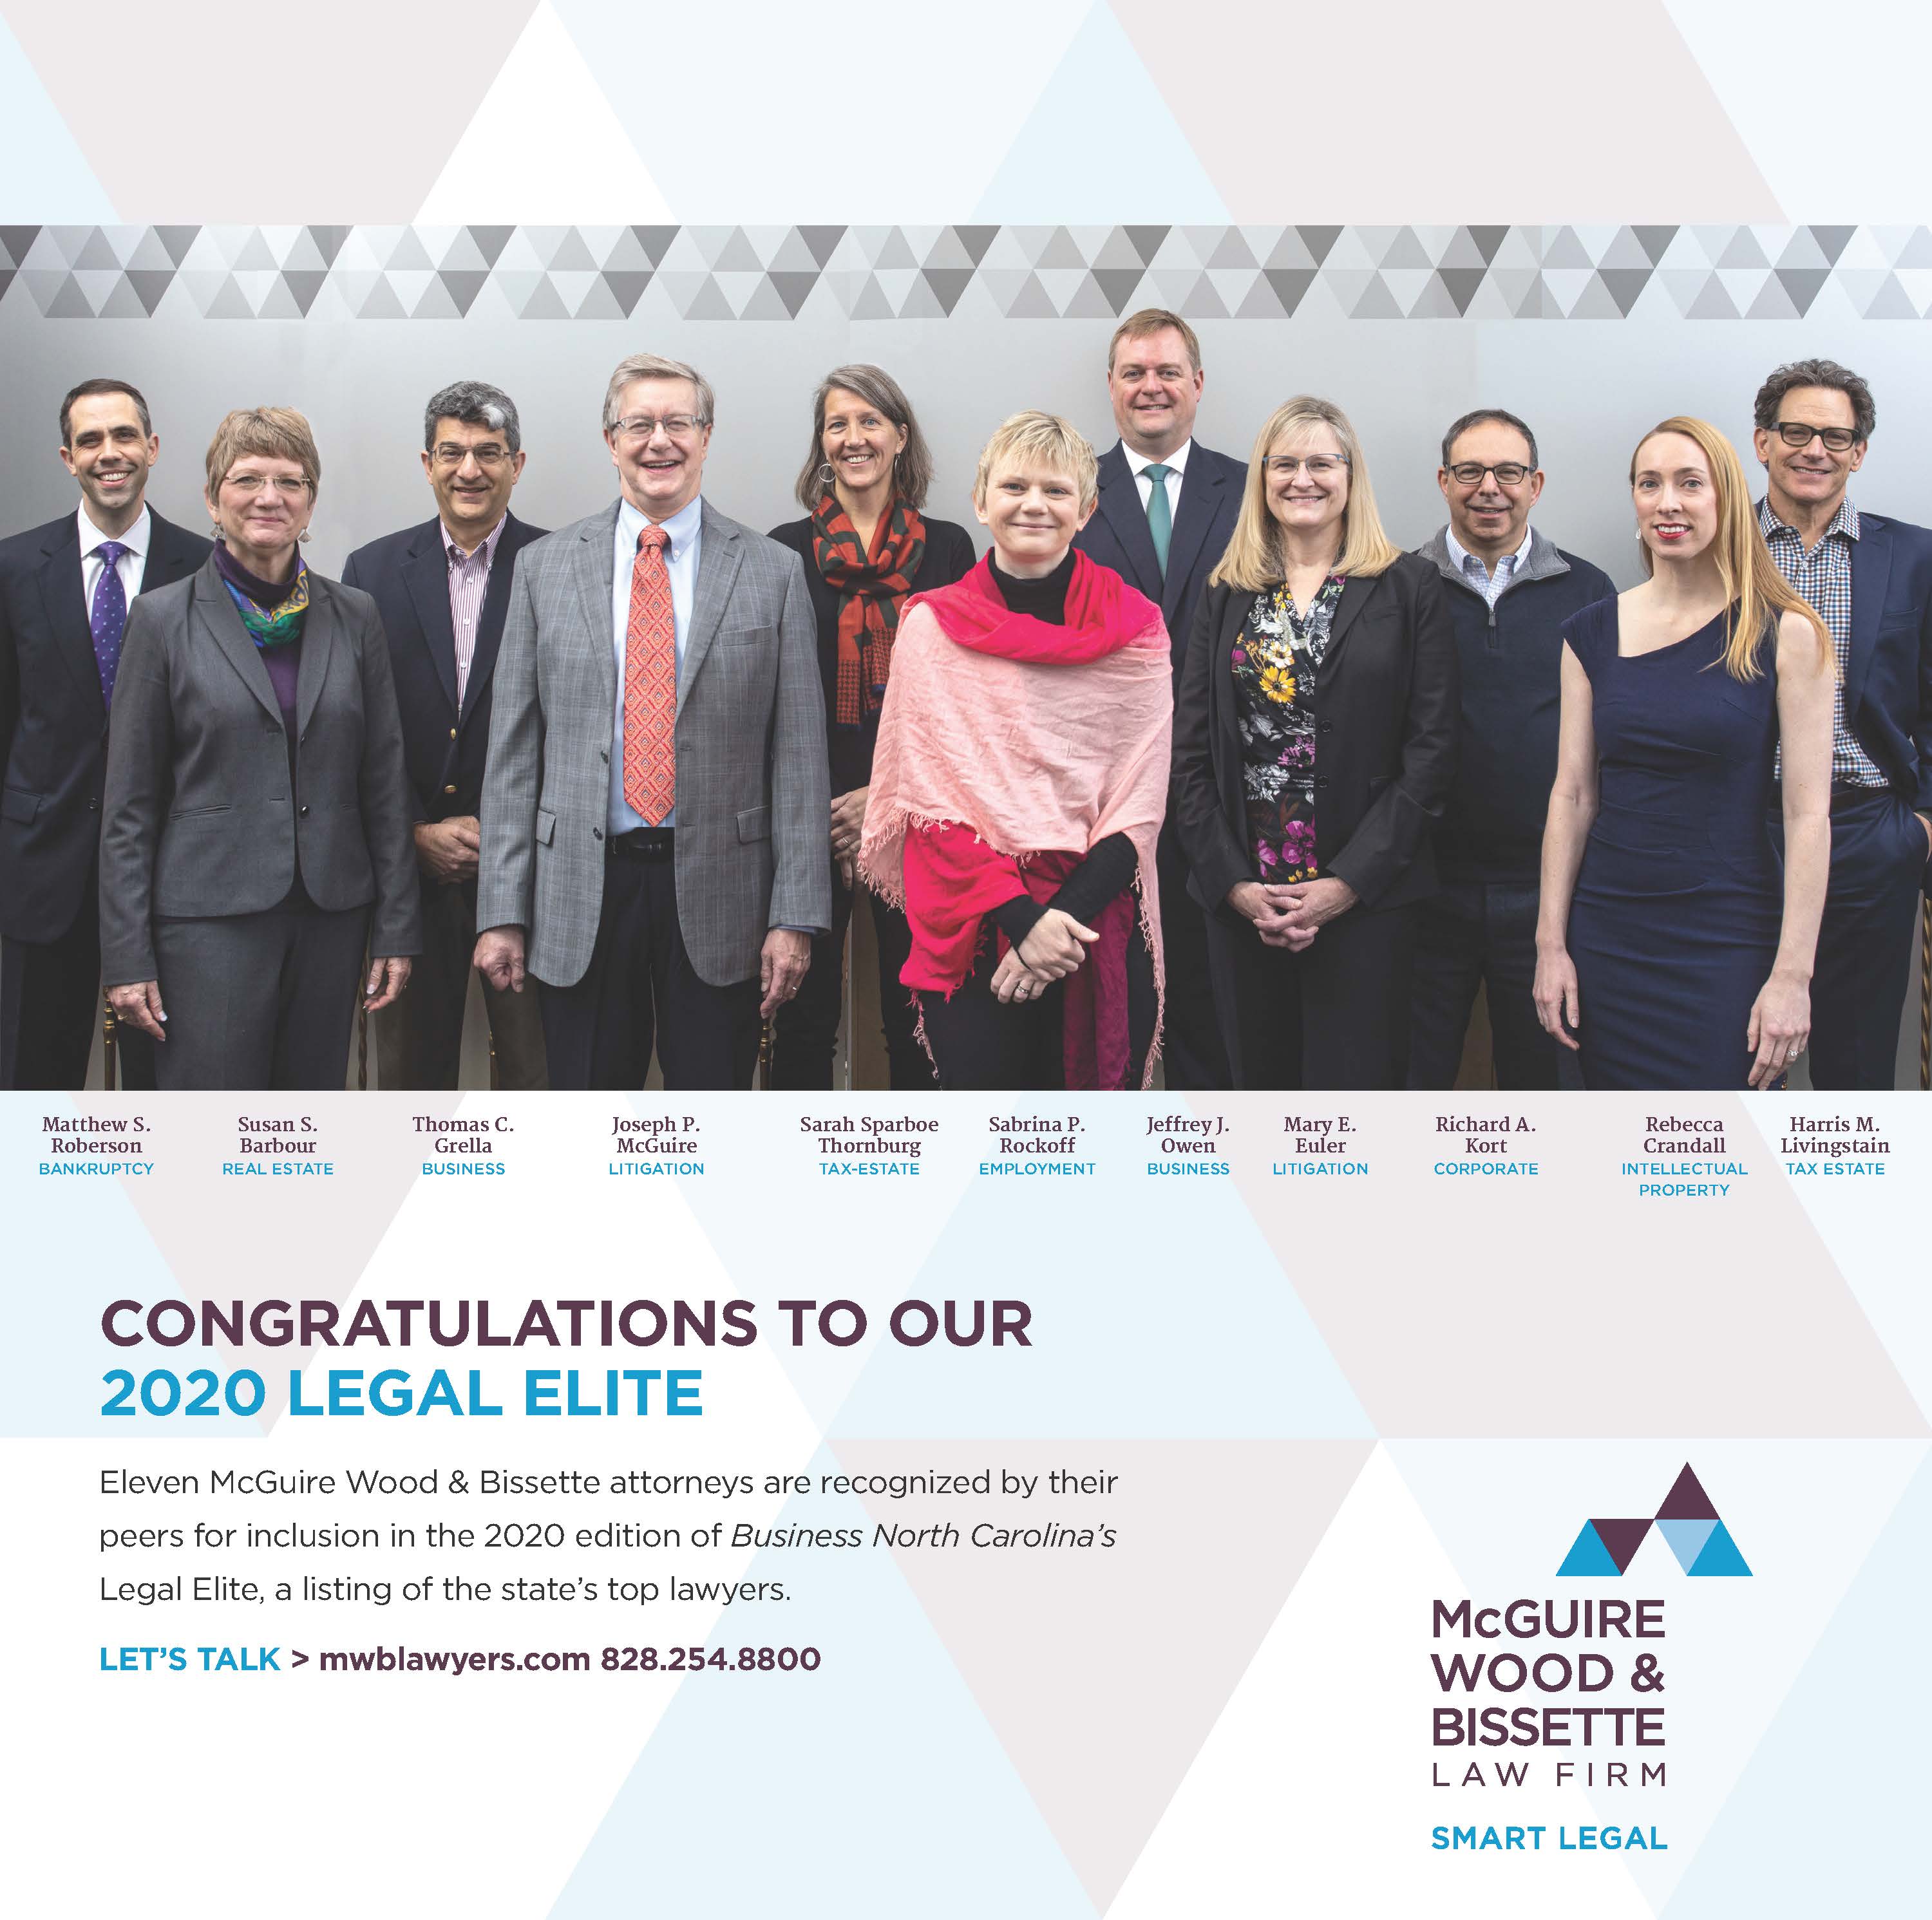 McGuire Wood & Bissette 2020 Legal Elite Attorneys